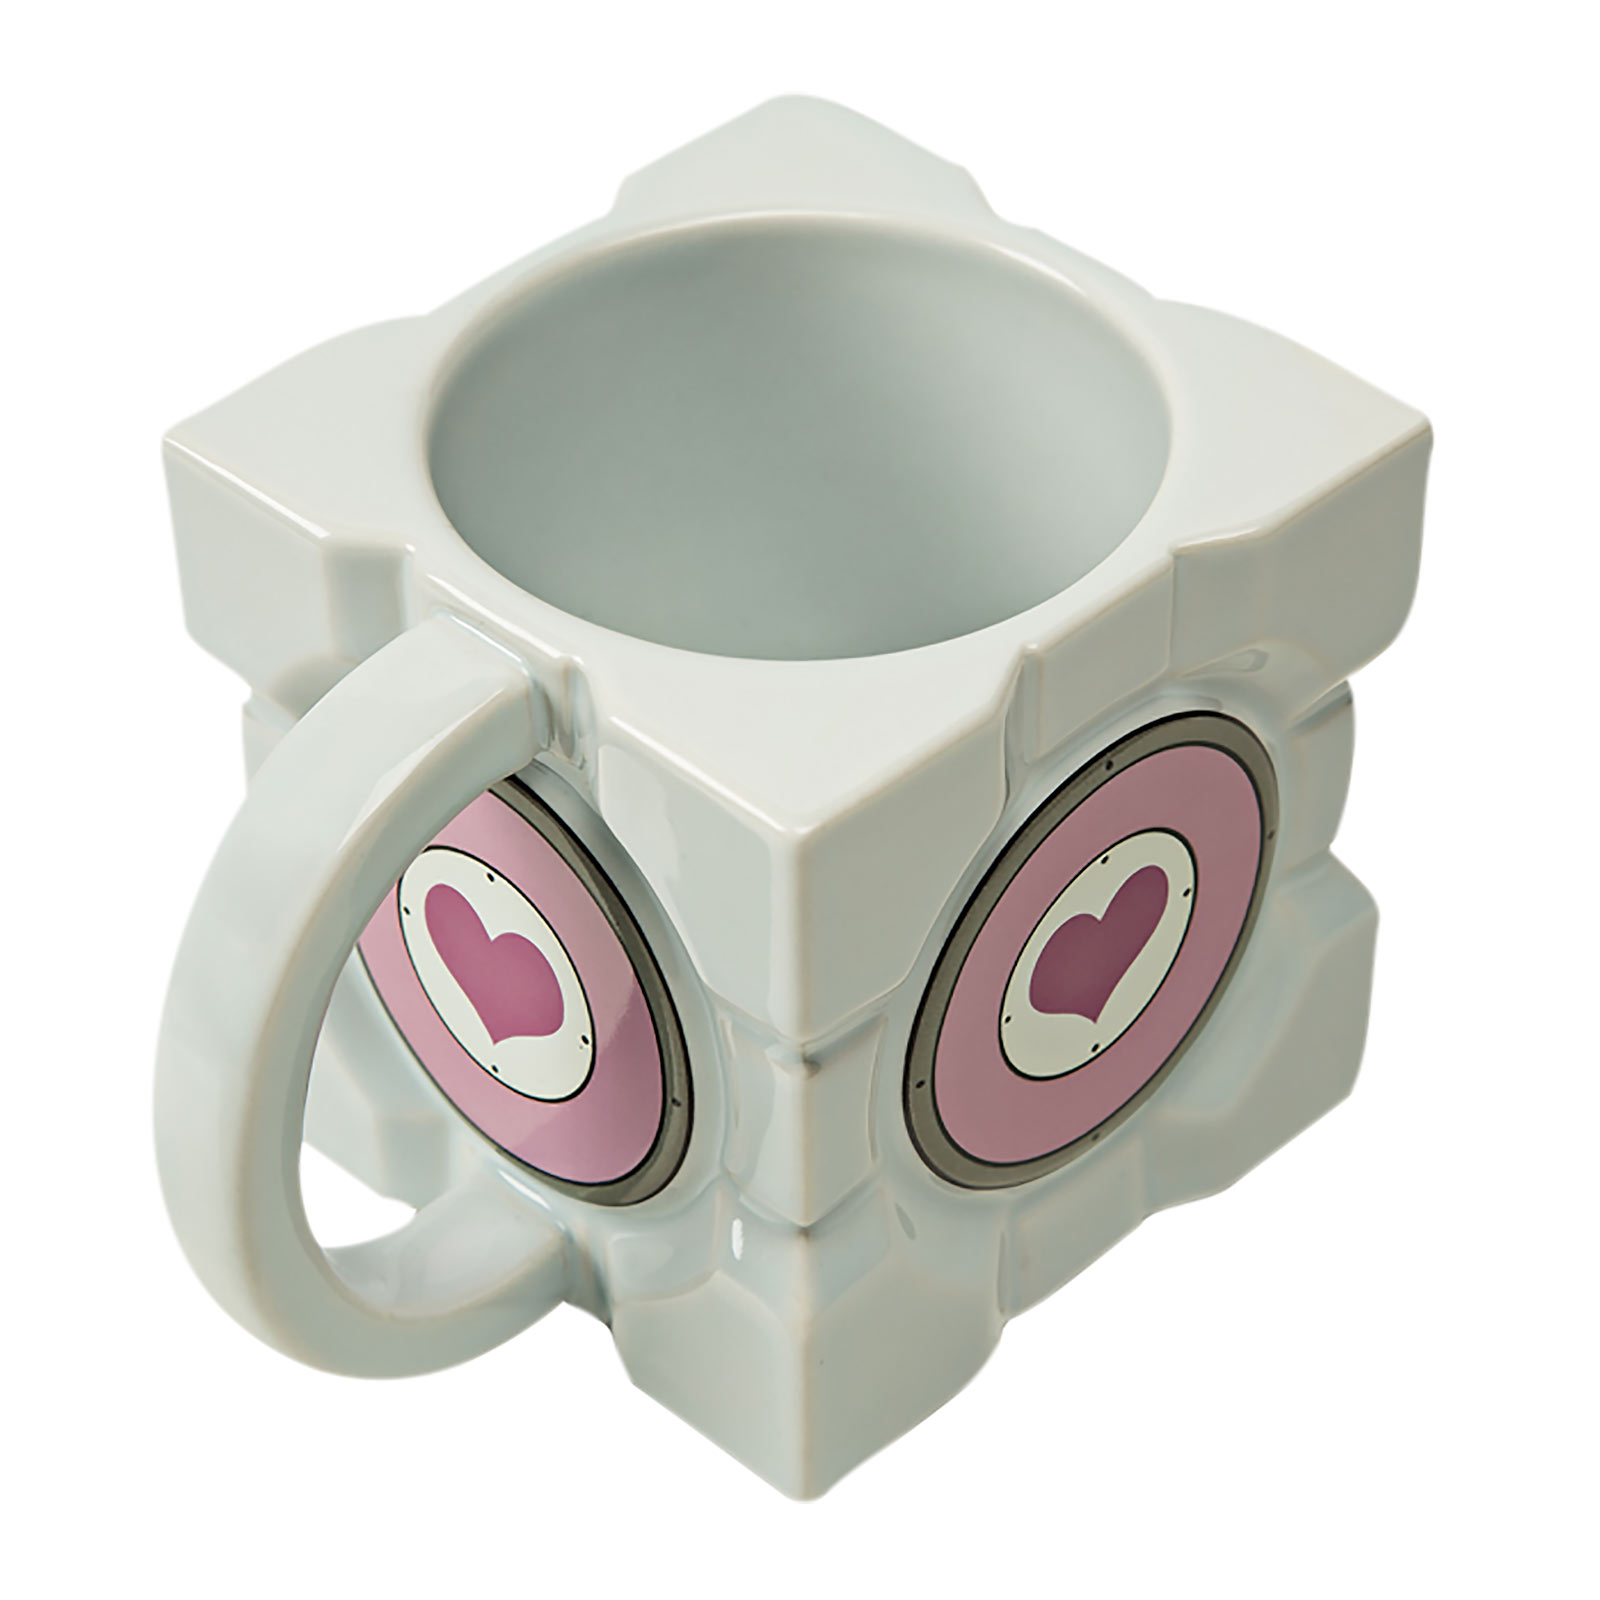 Portal 2 - Companion Cube Mug